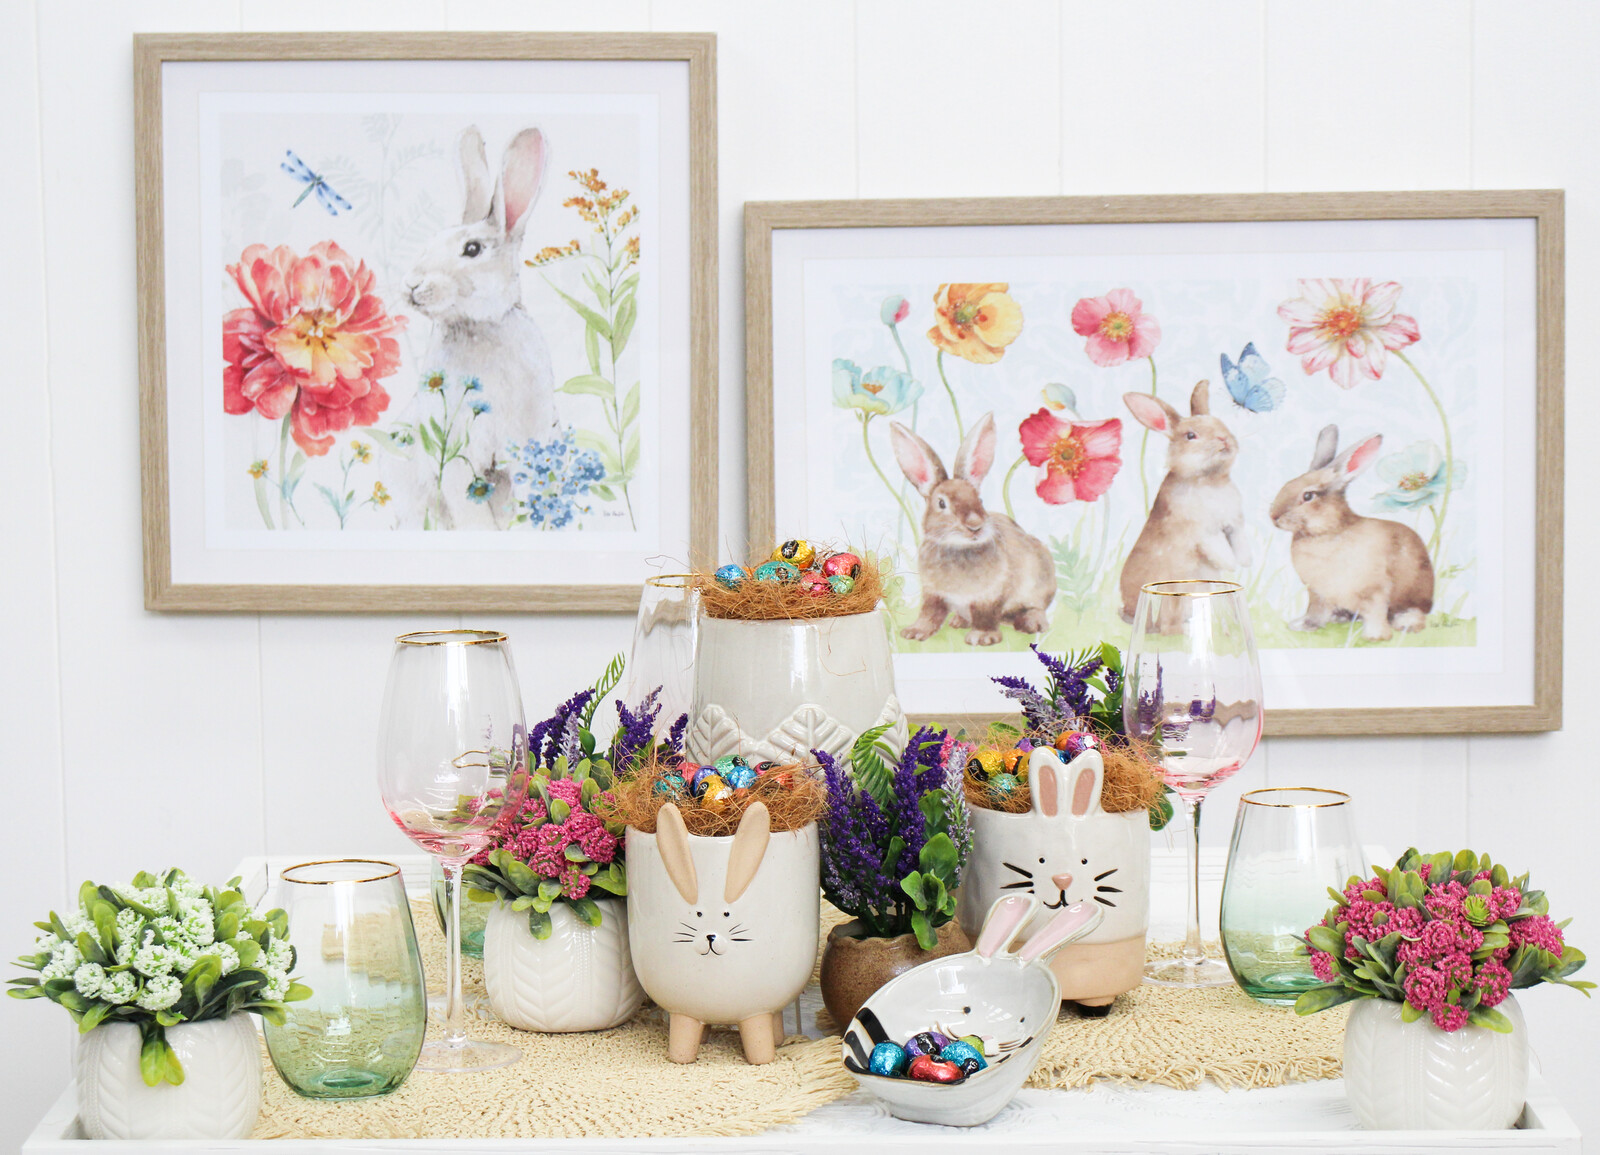 Framed Print Spring Bunnies